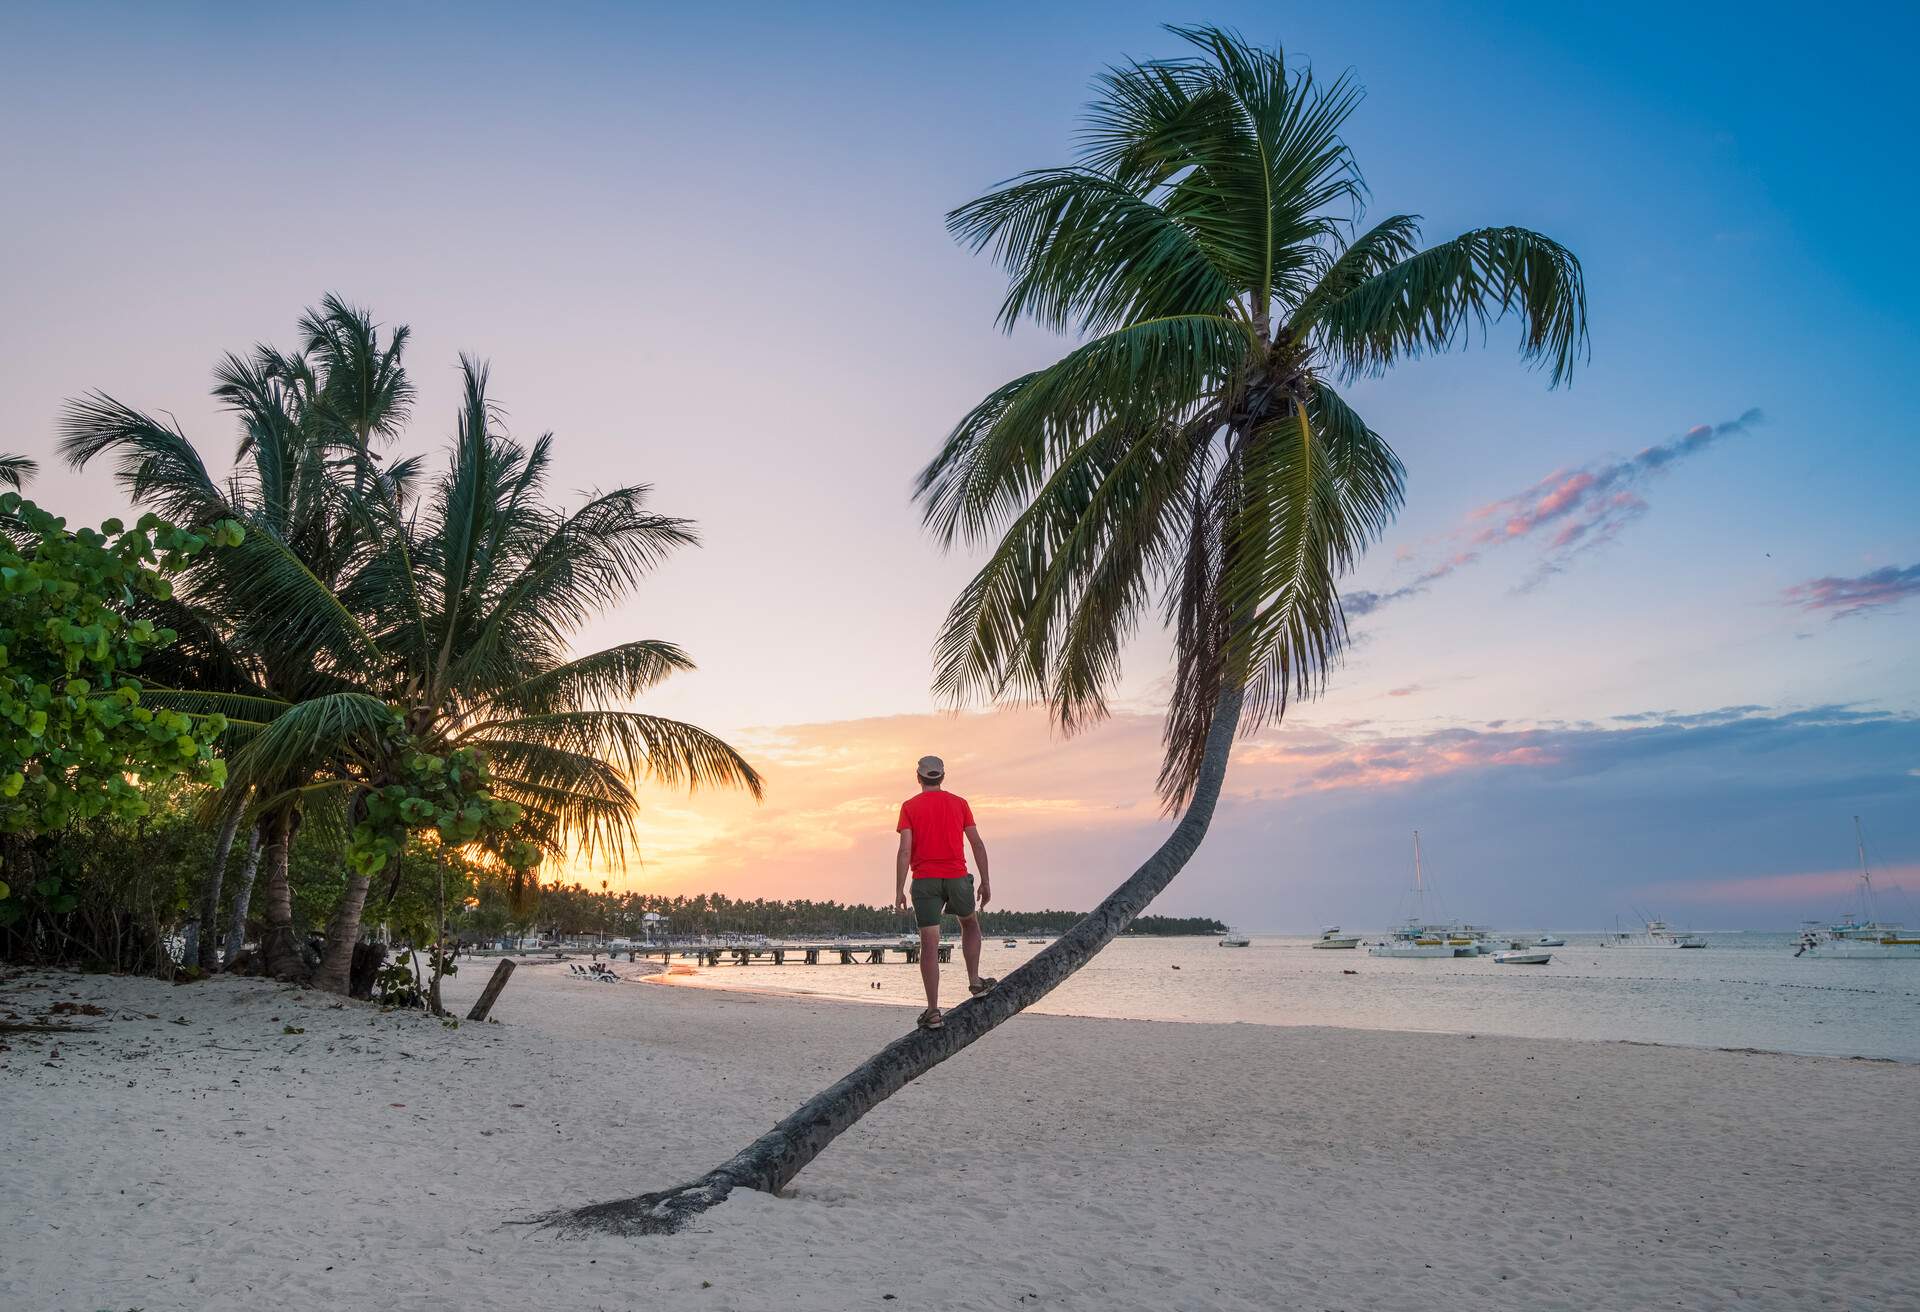 Cabeza de Toro beach, Punta Cana, Dominican Republic. Man standing on the trunk of a palm tree.